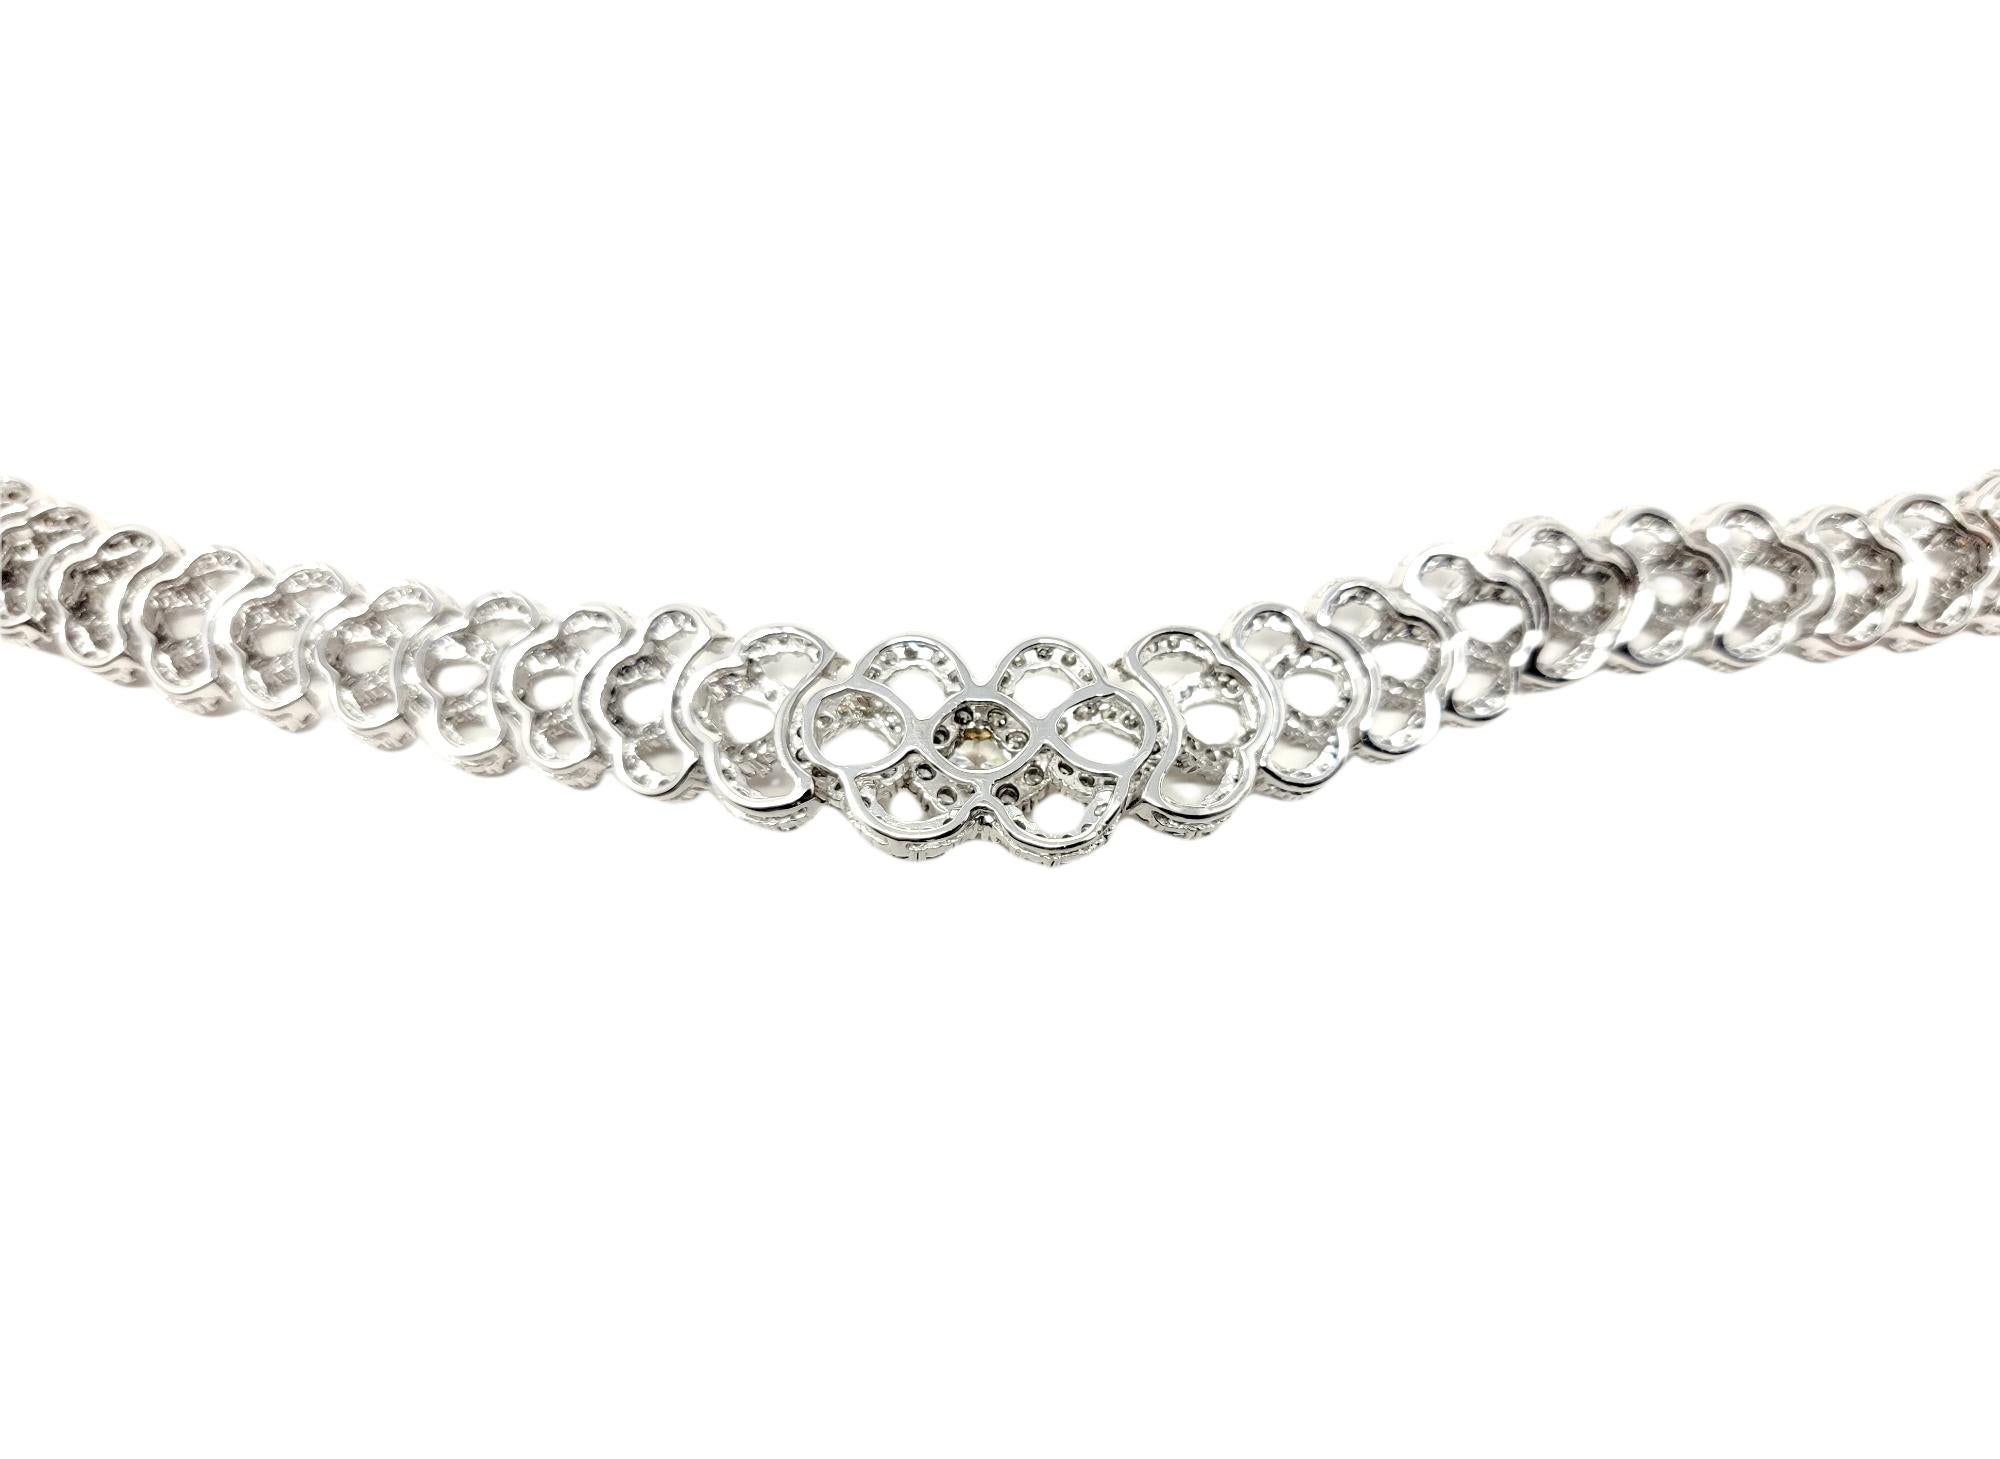 12.34 Carat Total Round Diamond Woven Braid Collar Necklace 14 Karat White Gold For Sale 1